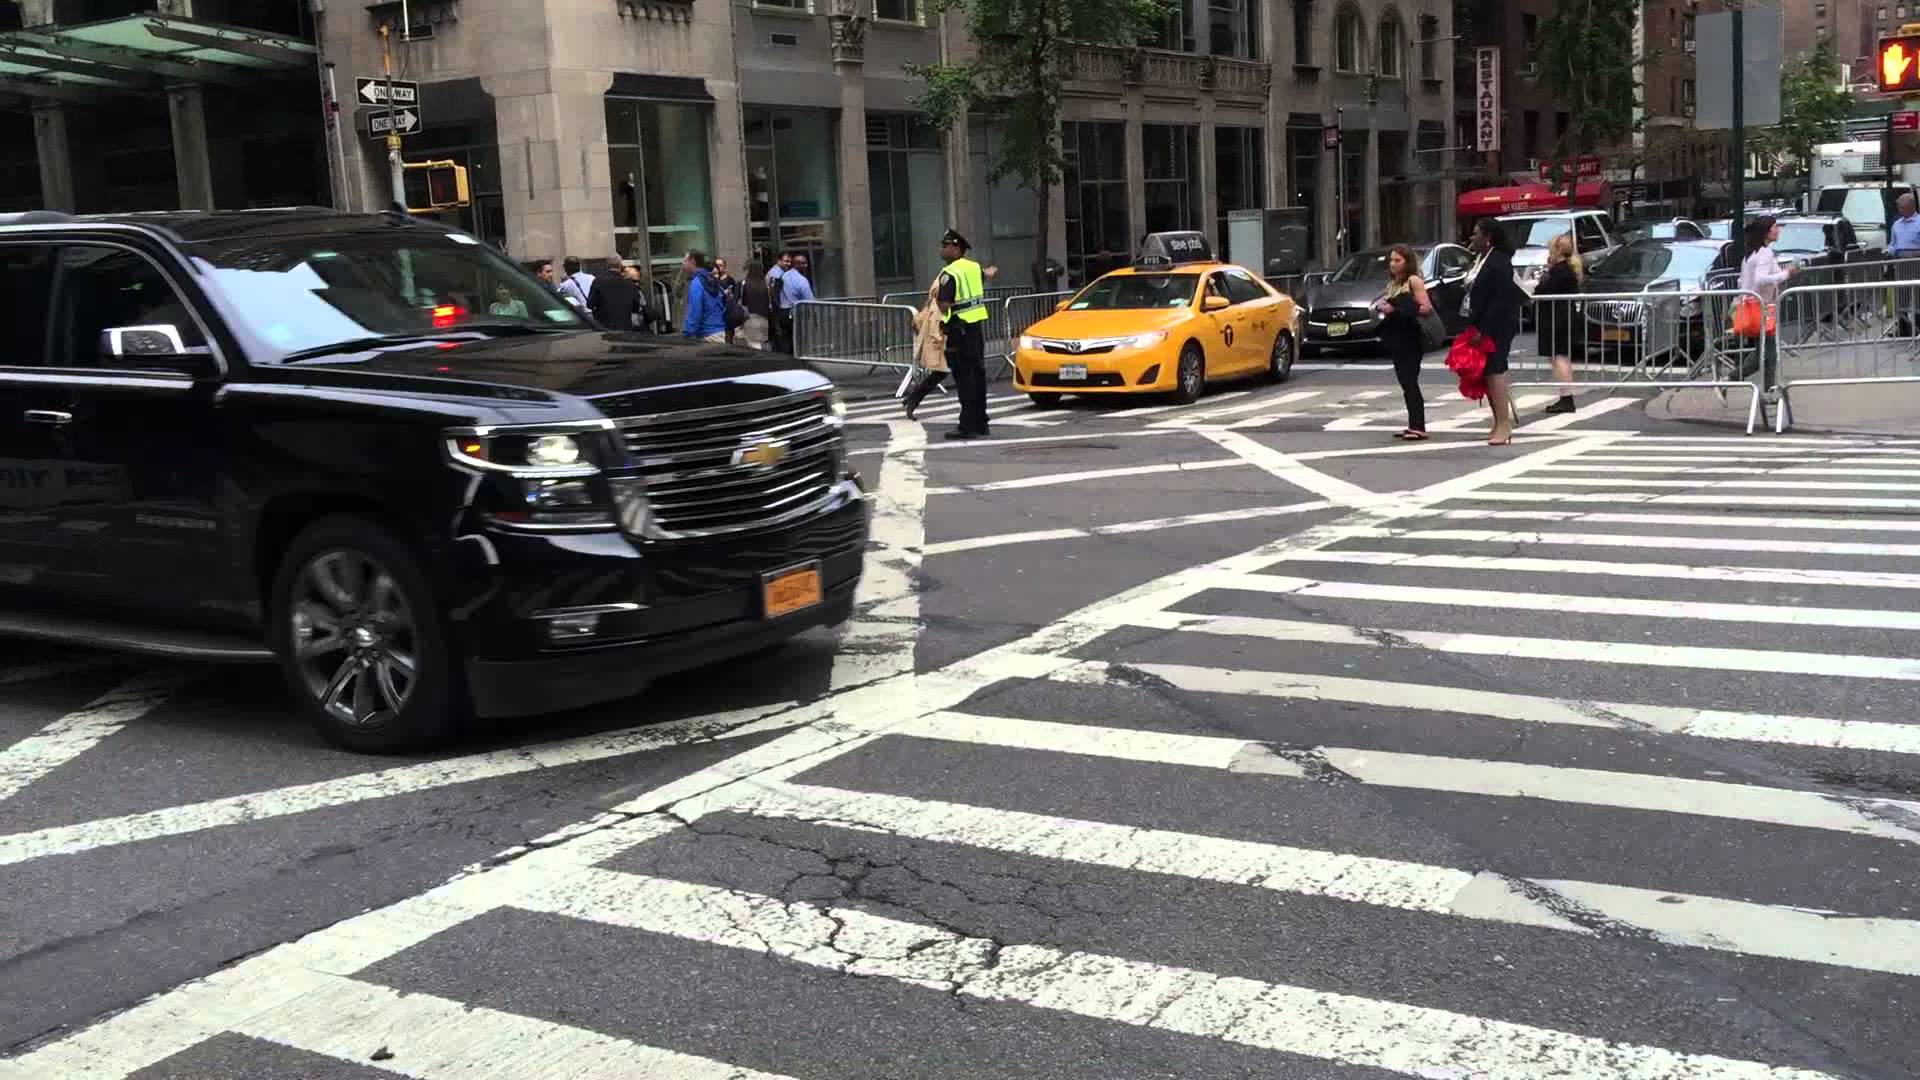 NYPD & UNITED STATES SECRET SERVICE ESCORTING DIPLOMATIC MOTORCADE